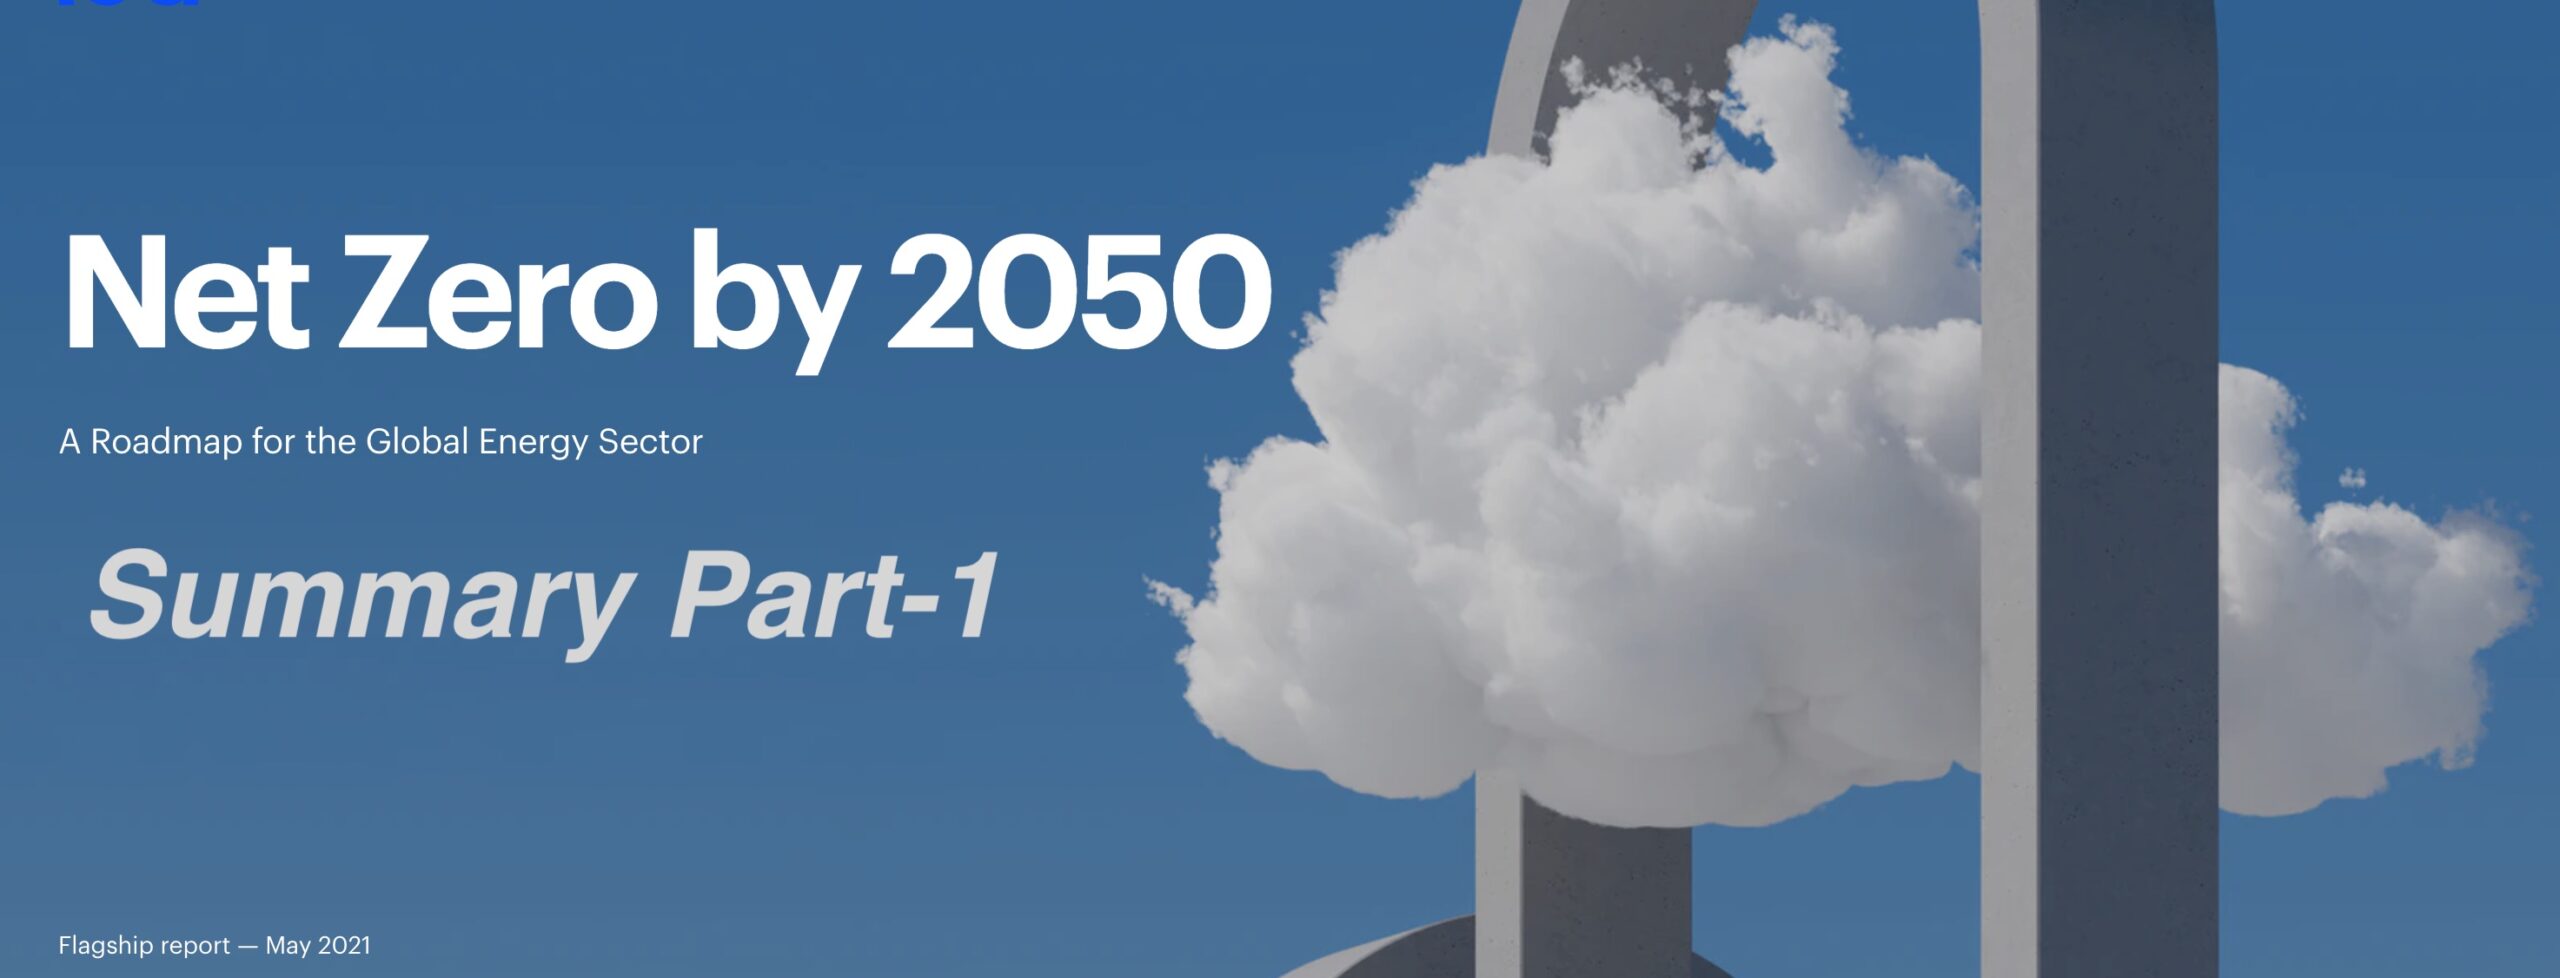 IEA Net Zero 2050 Summary / Part 1